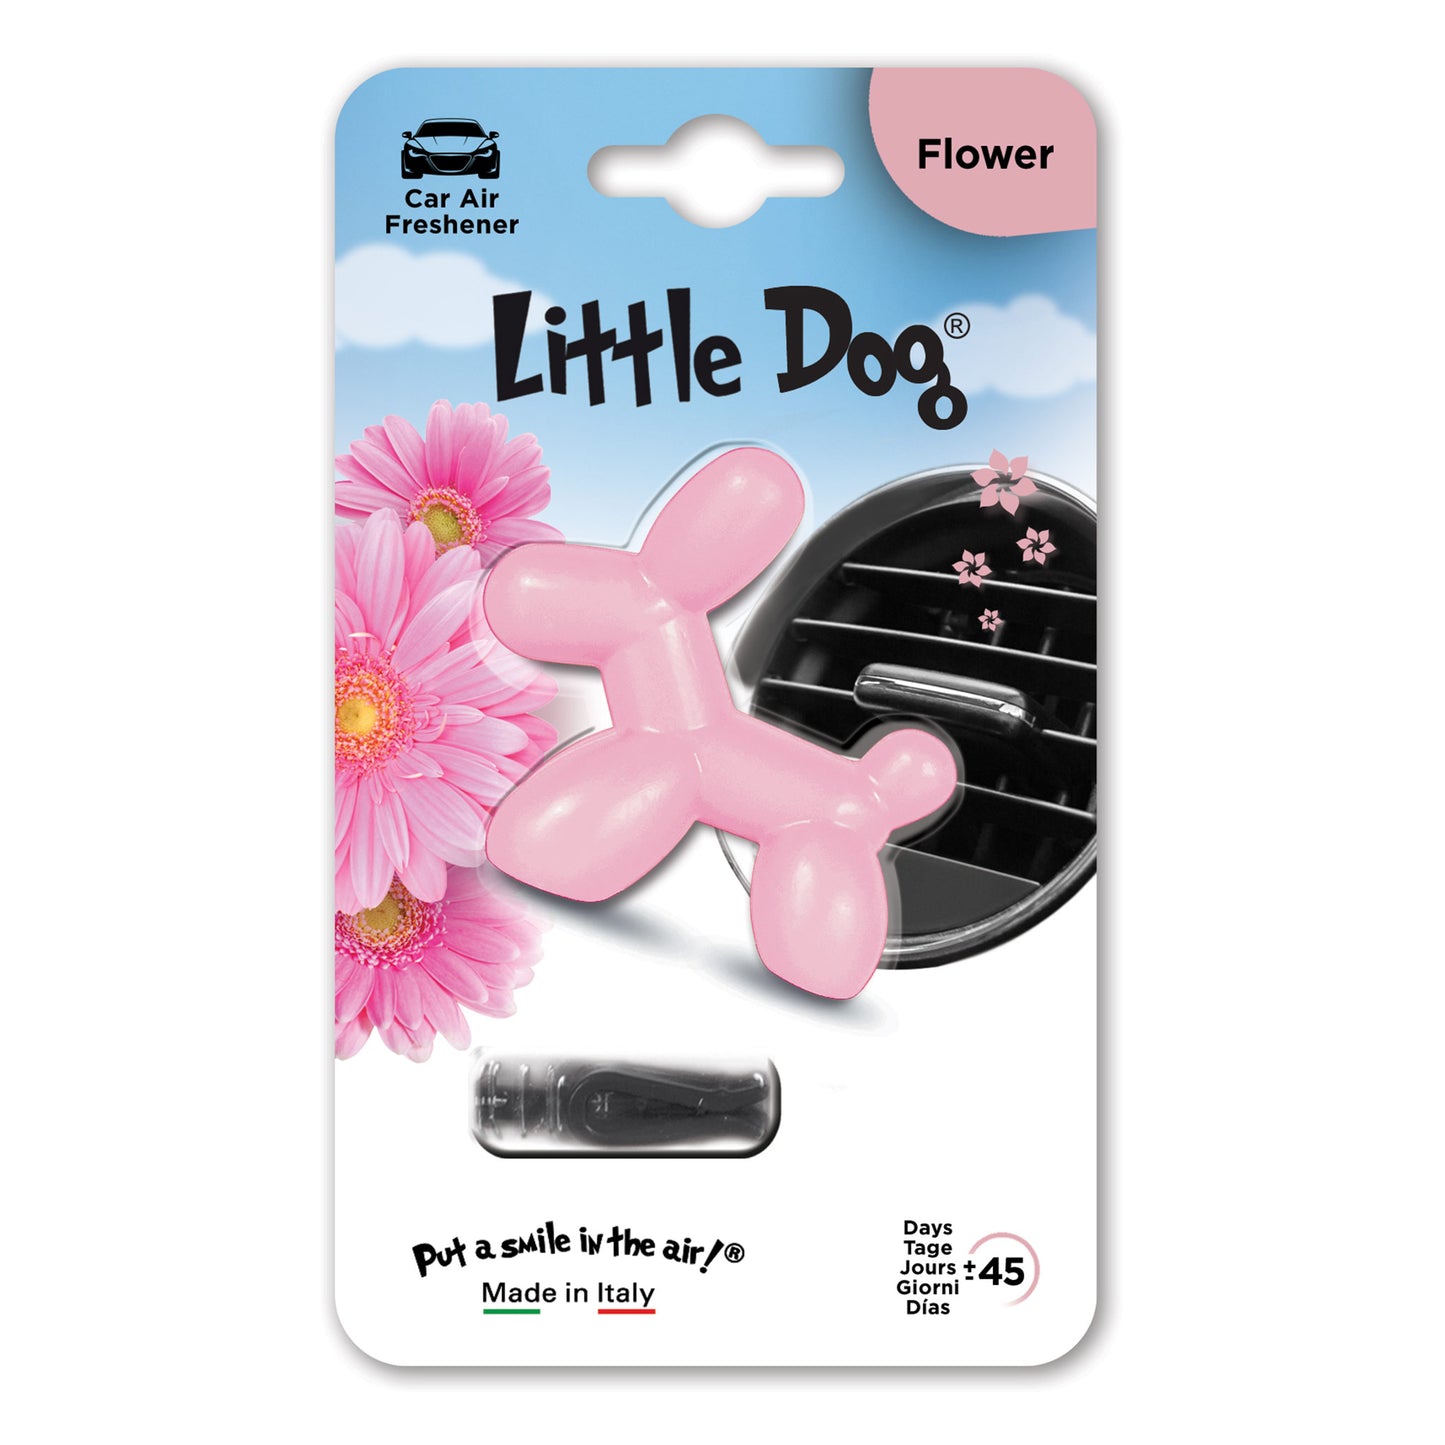 Little Dog® – Little Joe